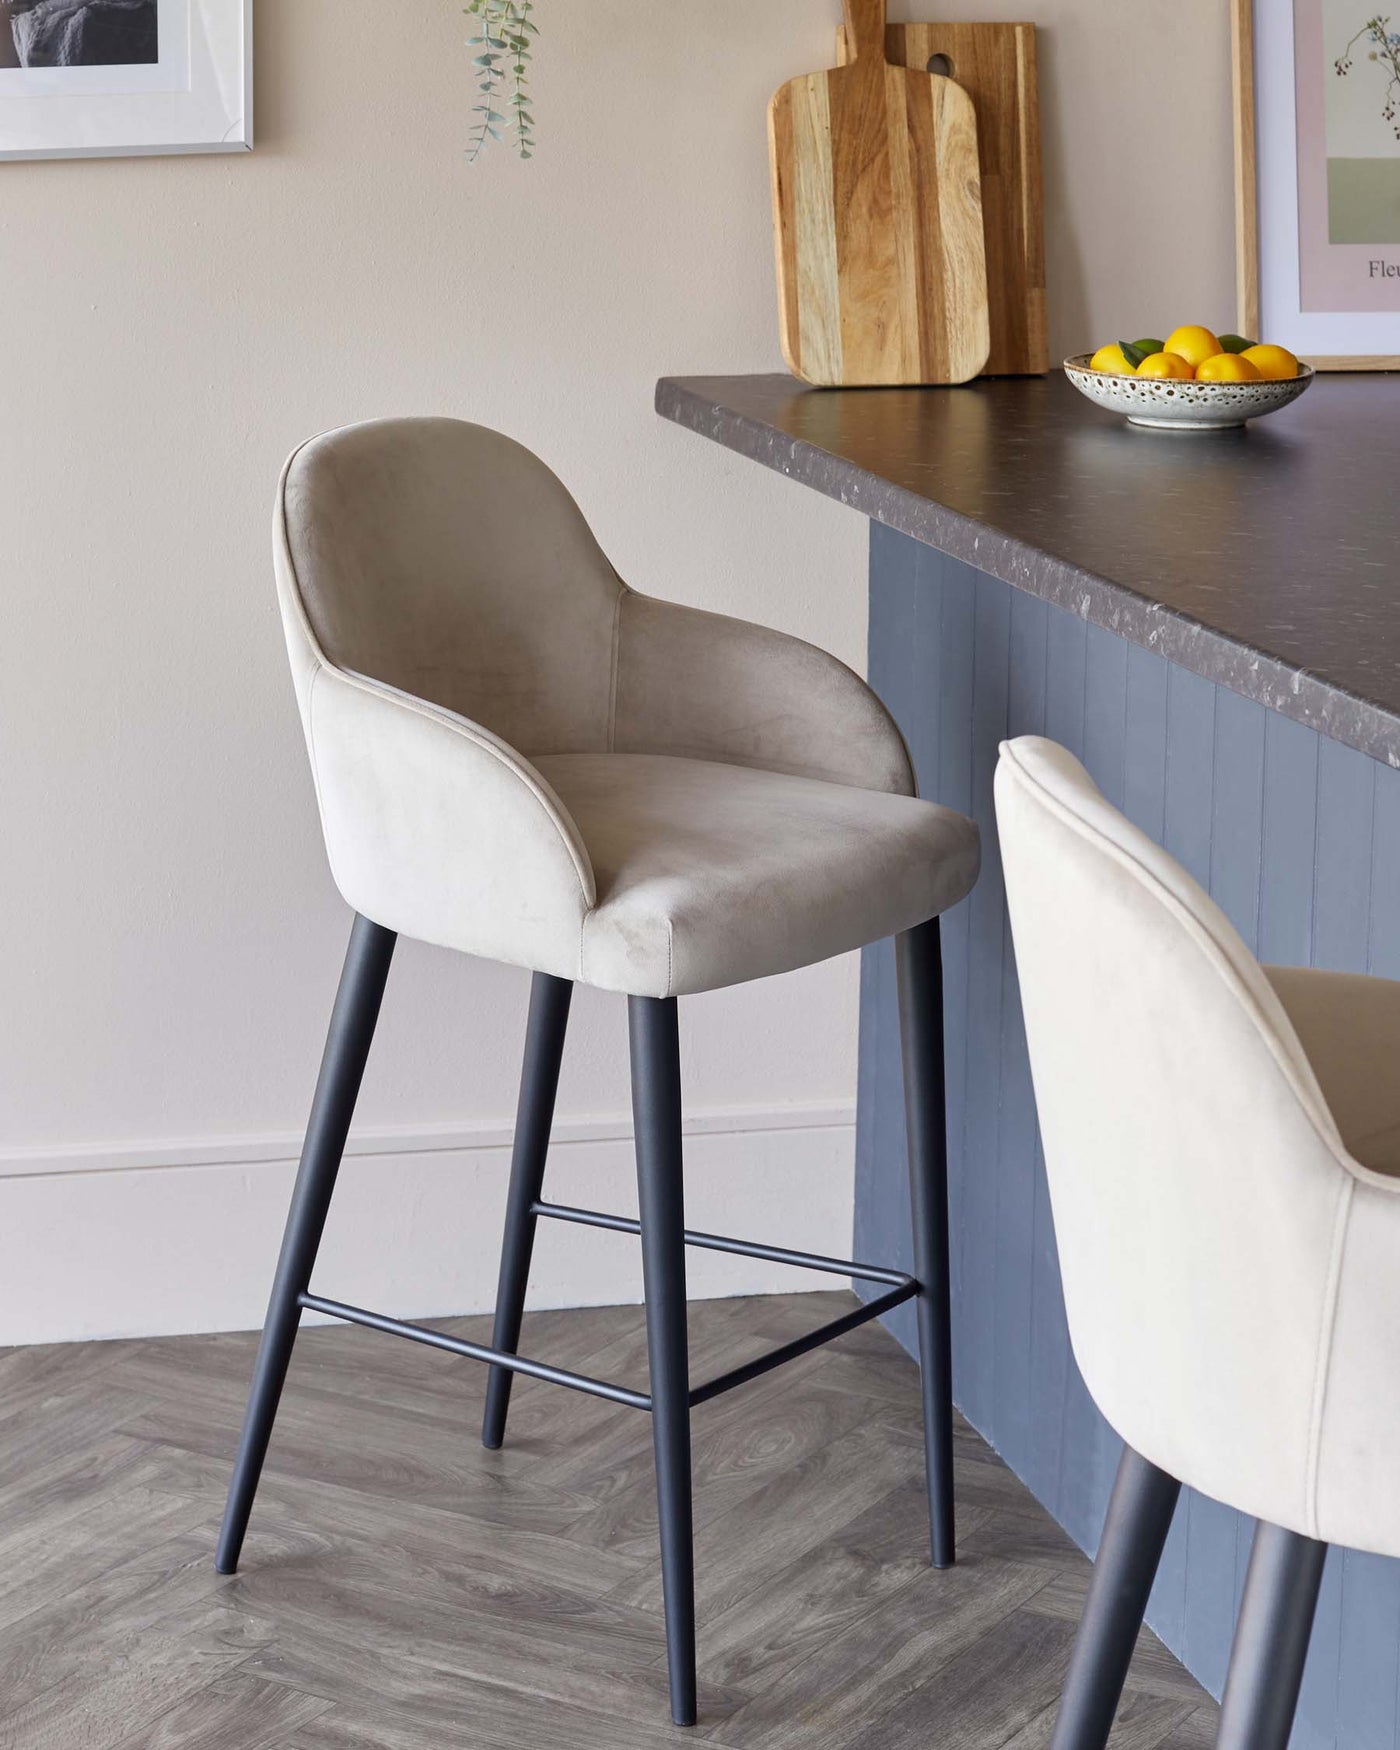 Modern velvet upholstered bar stools with black metal legs in a stylish kitchen setting.